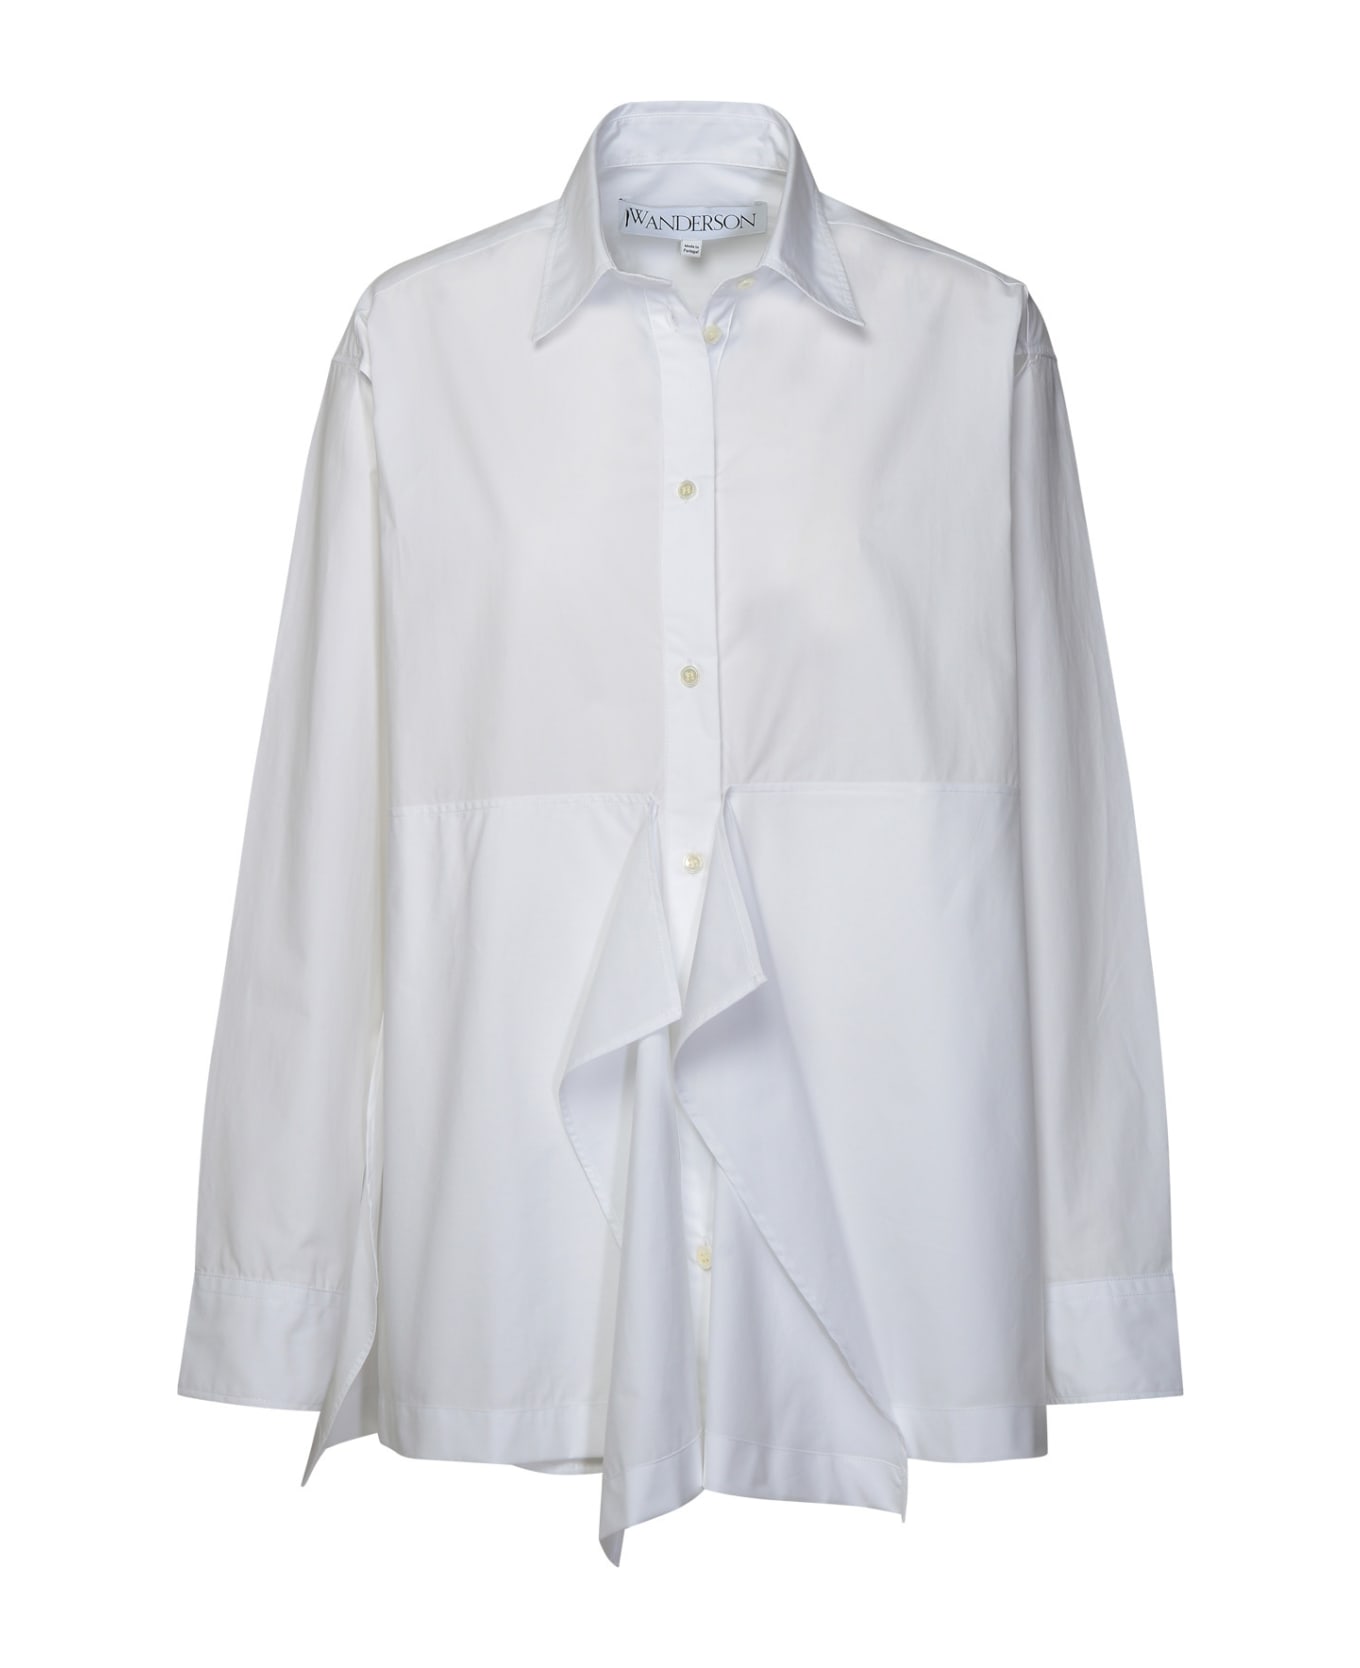 J.W. Anderson 'peplum' White Cotton Shirt - White シャツ